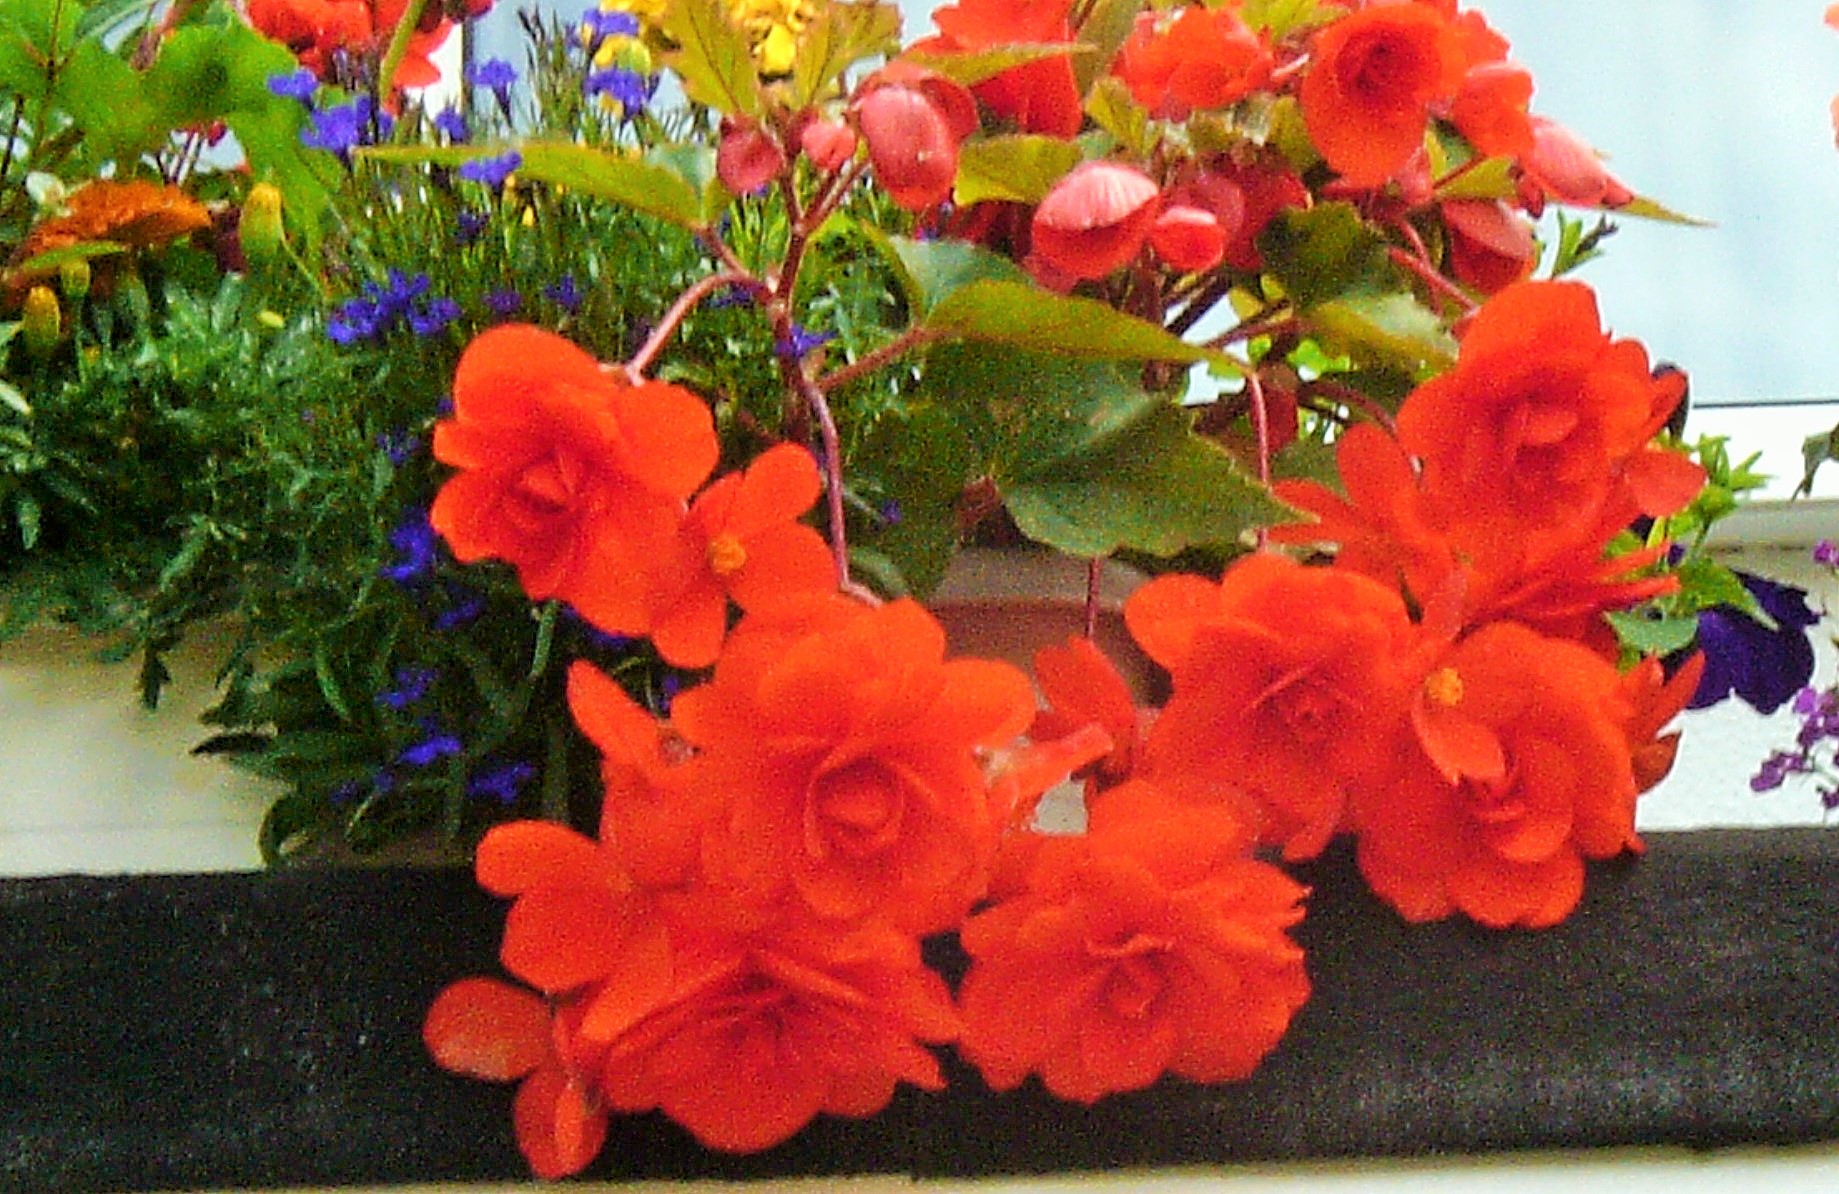 Flowers in my garden